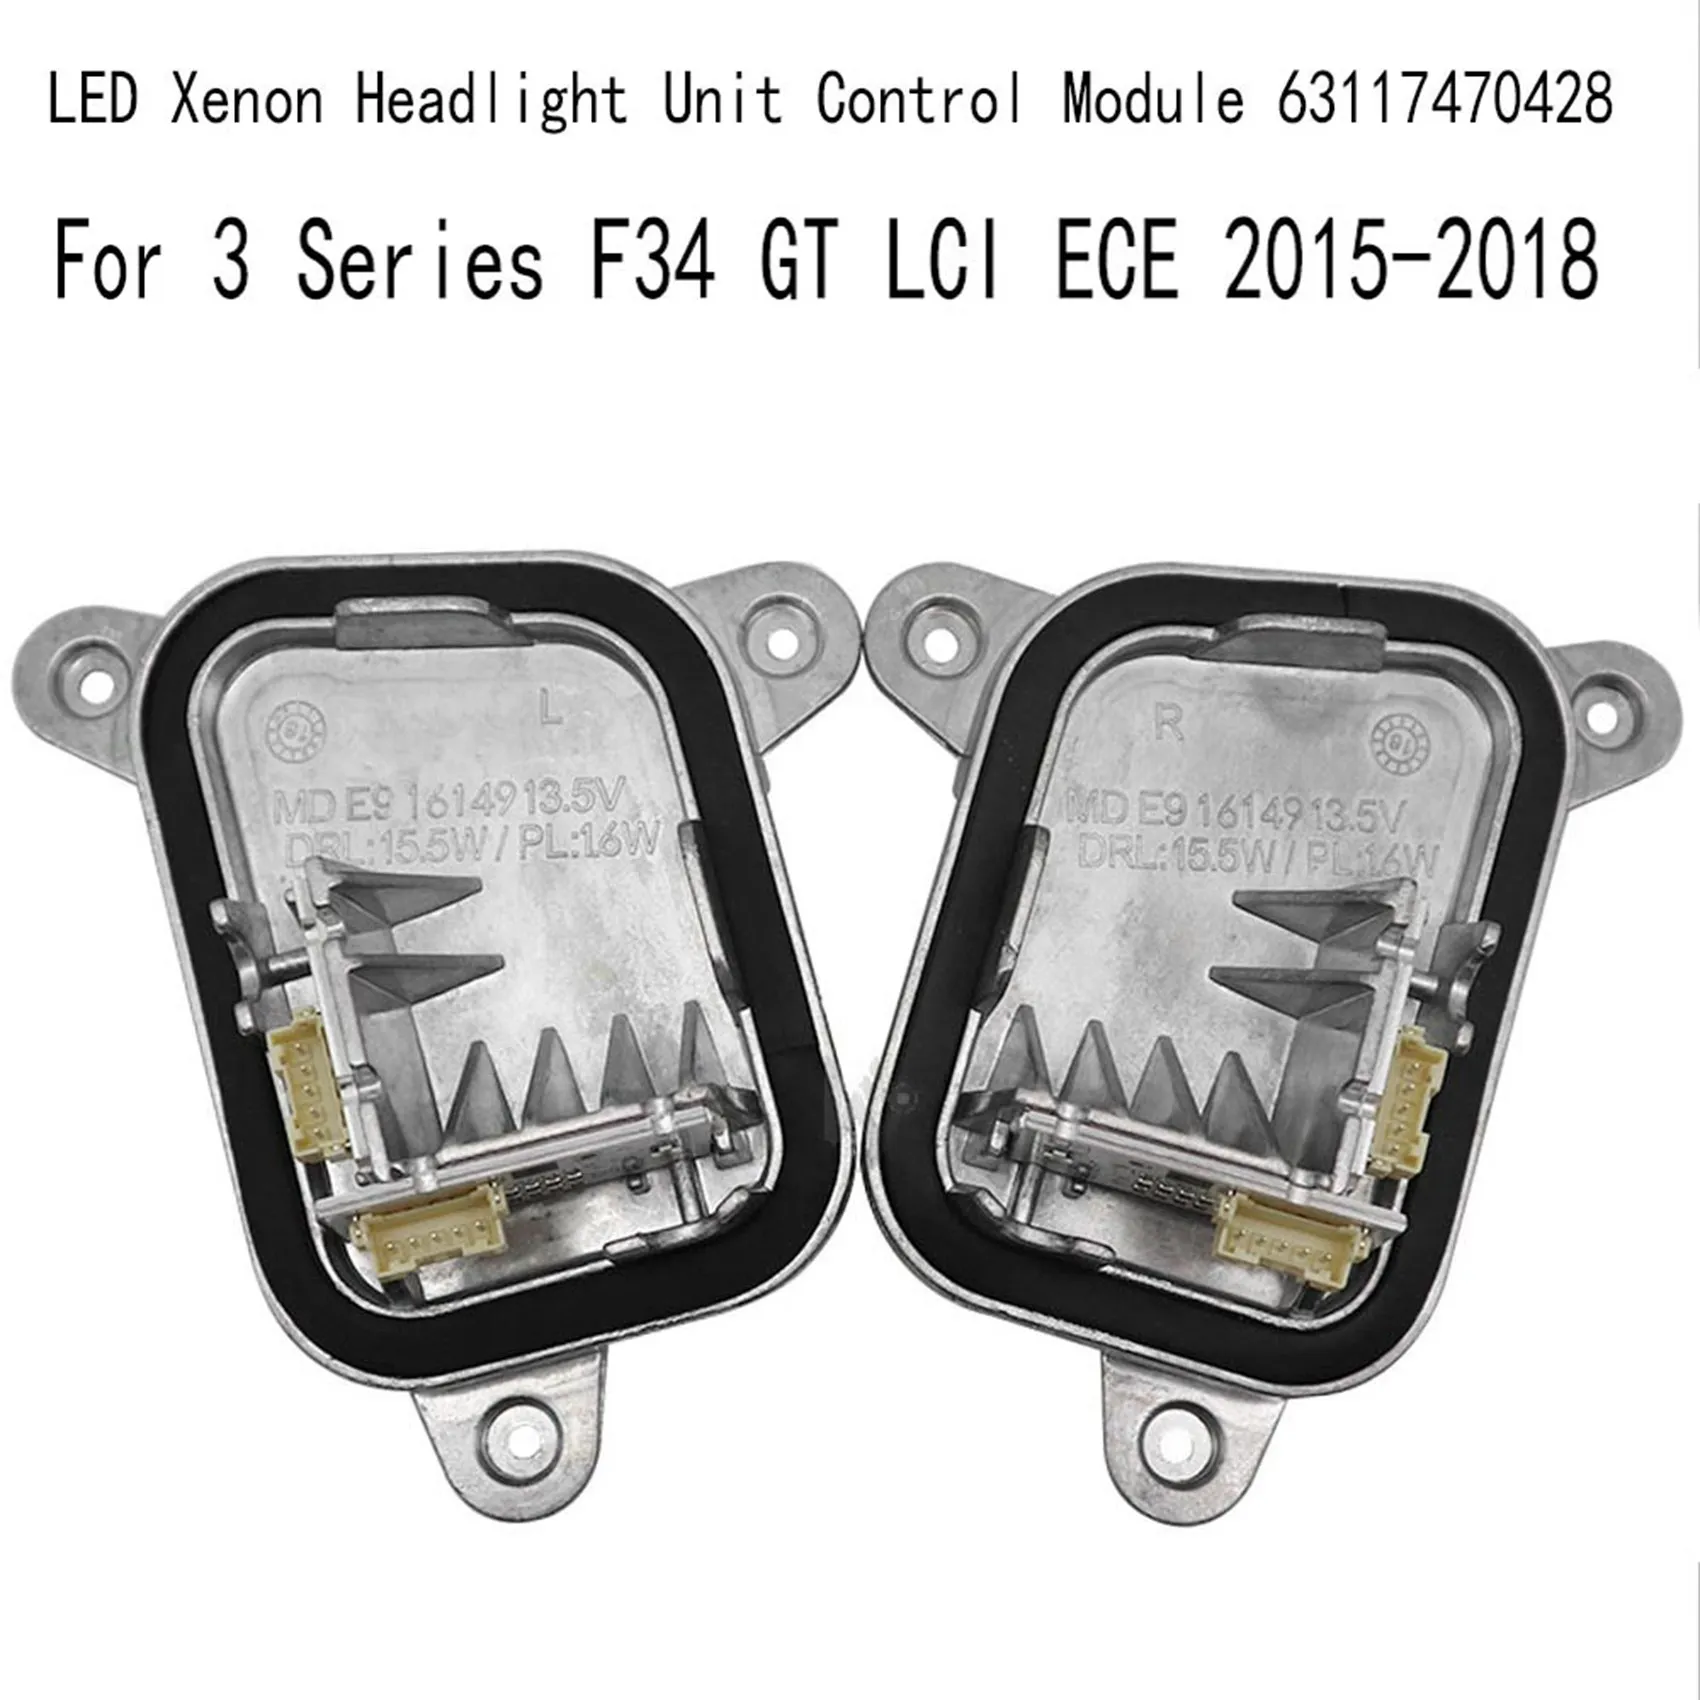 

Car Left LED Xenon Headlight Unit Control Module for BMW 3 Series F34 GT LCI ECE 2015-2018 63117470427